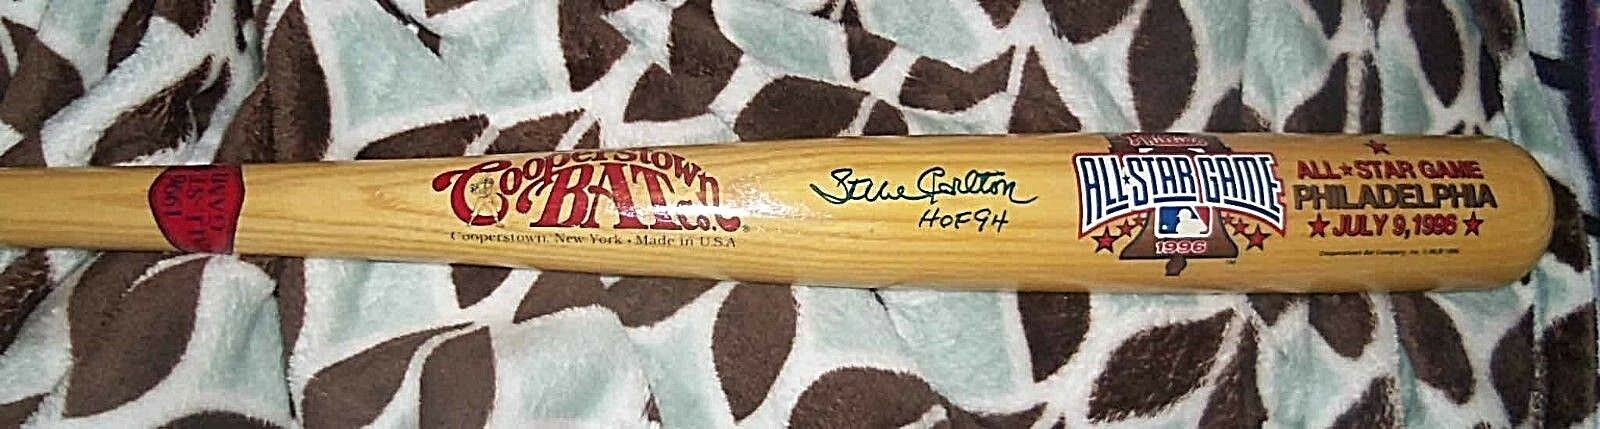 Phillies STEVE CARLTON signed Cooperstown Bat Co. Baseball Bat w/COA '96 AS GAME